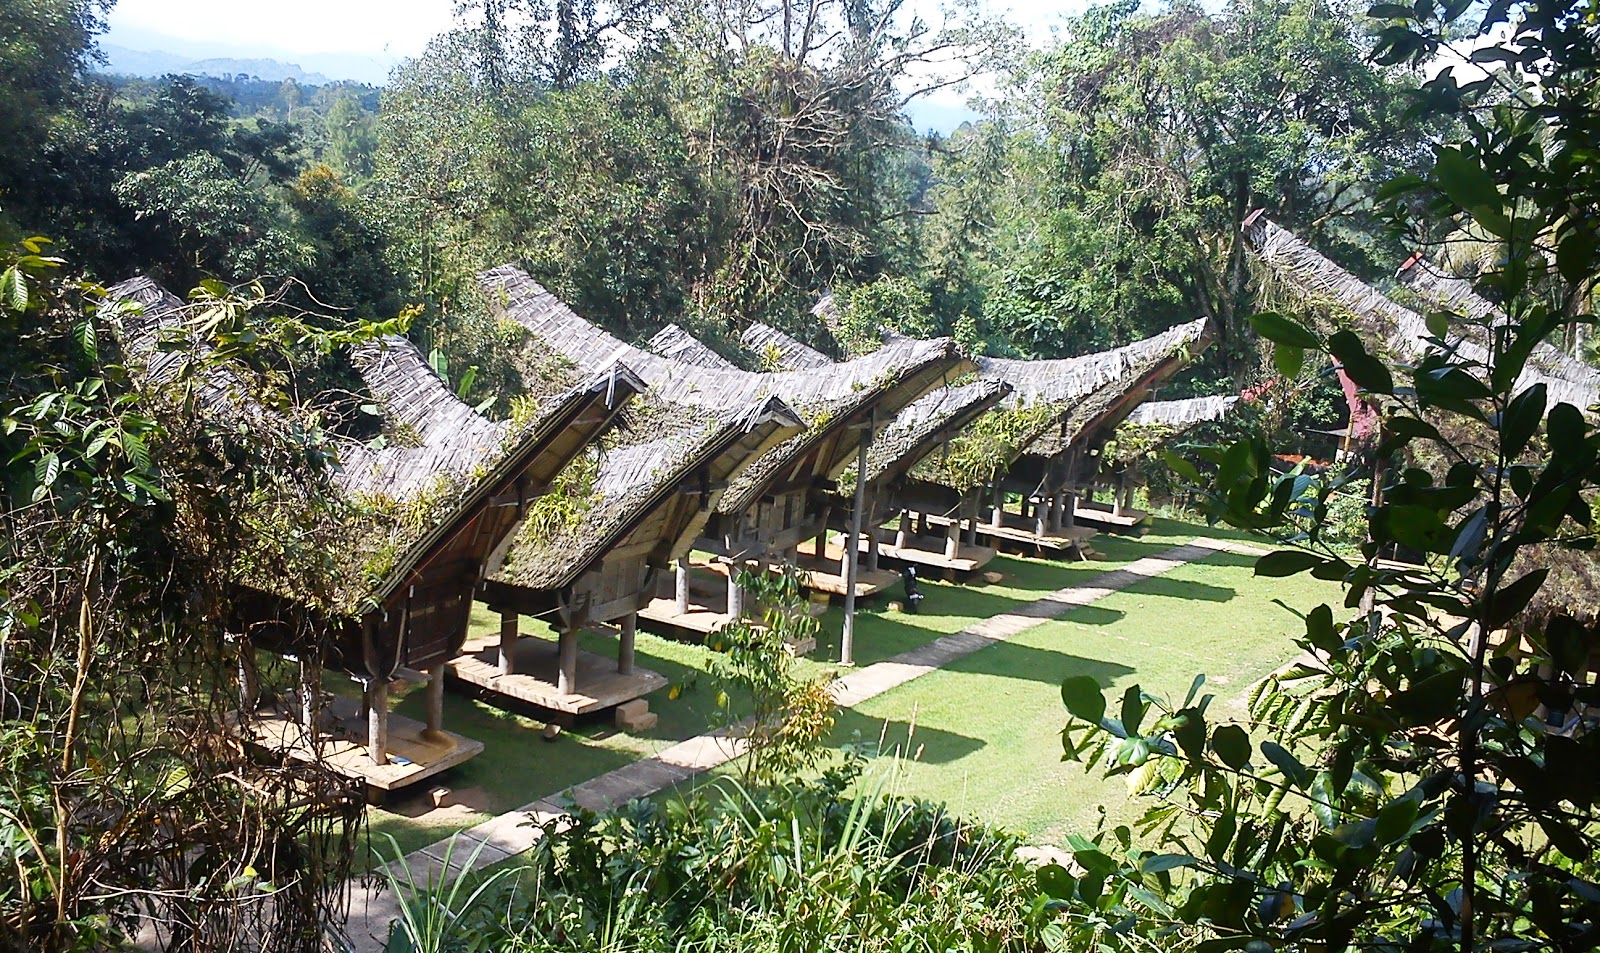 sodventure Tana Toraja, Wisata Budaya Unik & Pemandangan